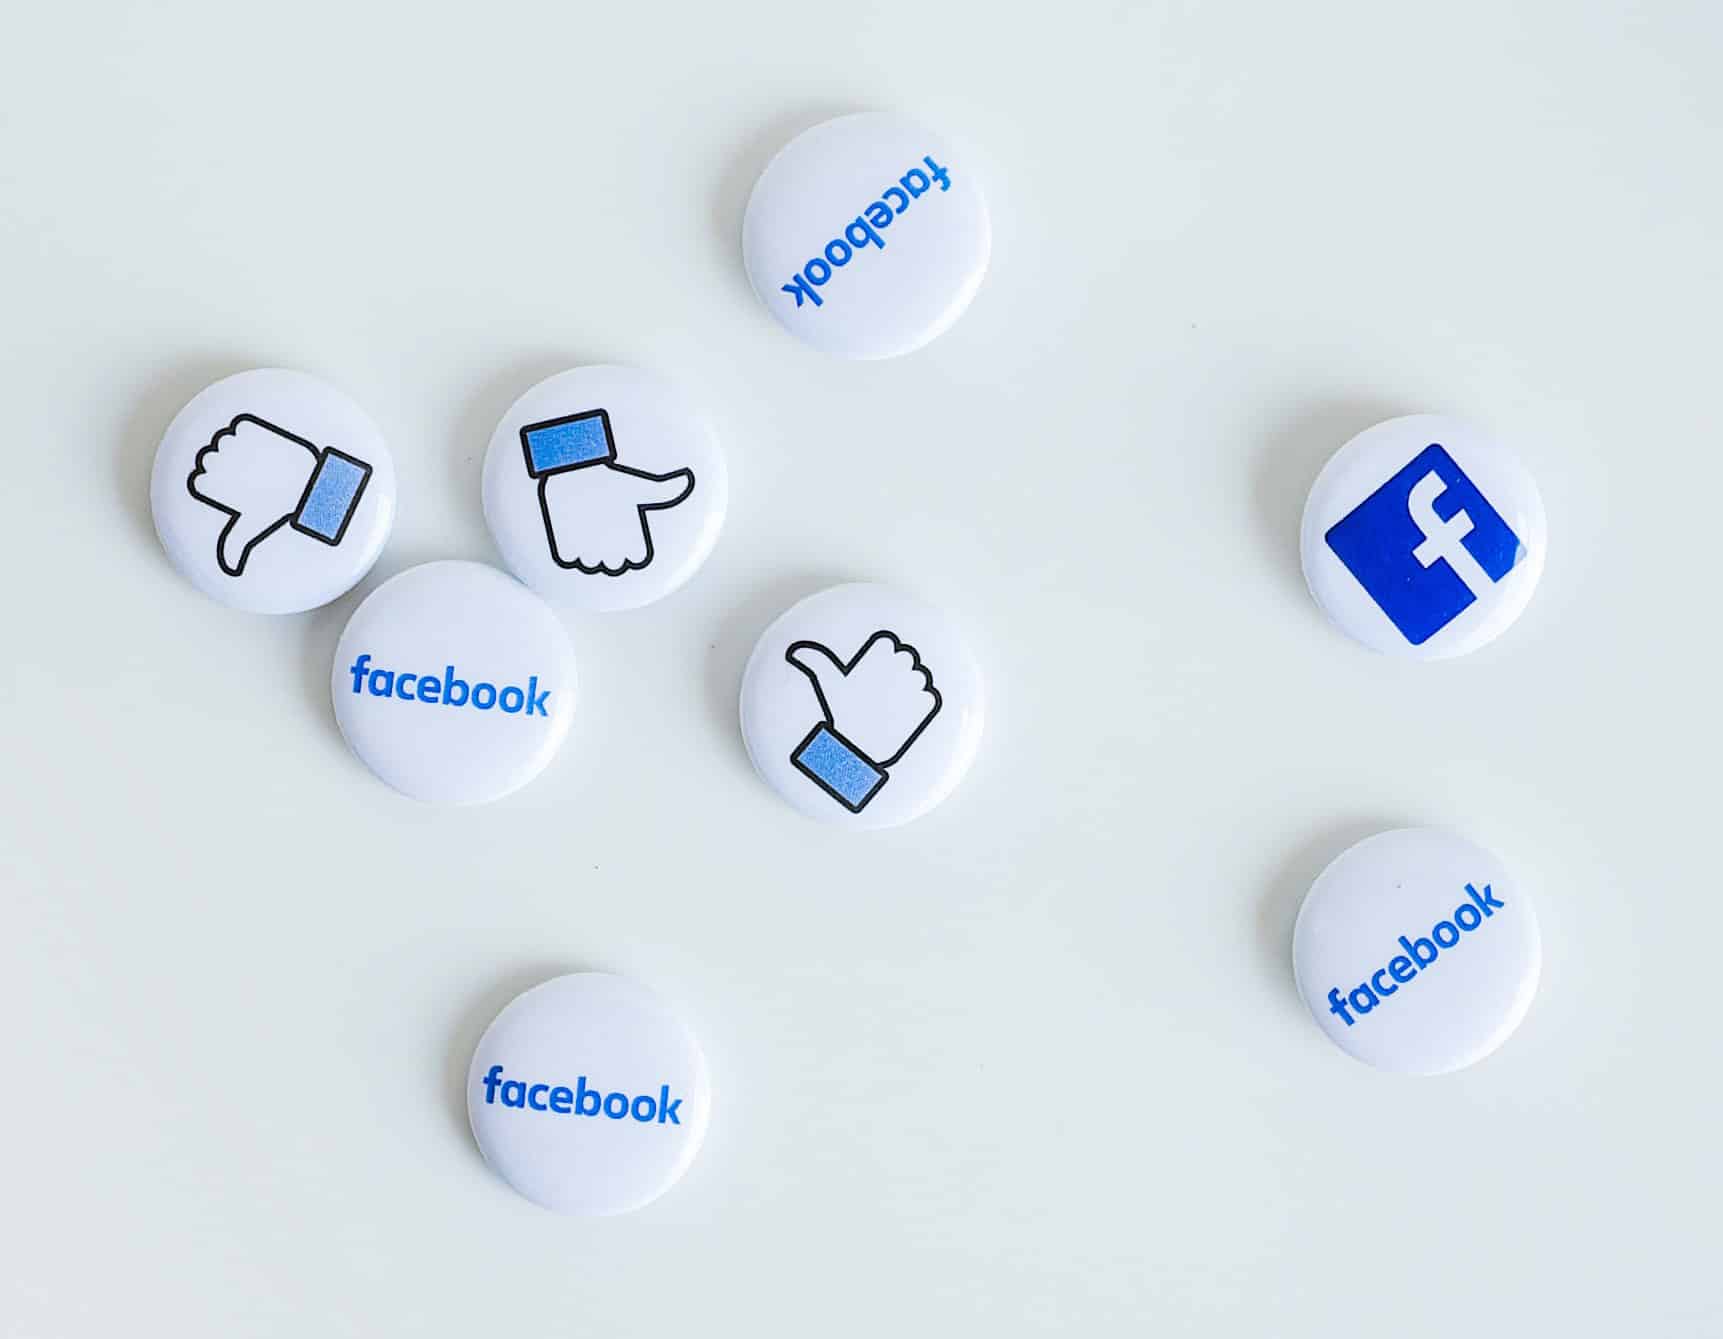  Facebook: On Adding Audio to Social